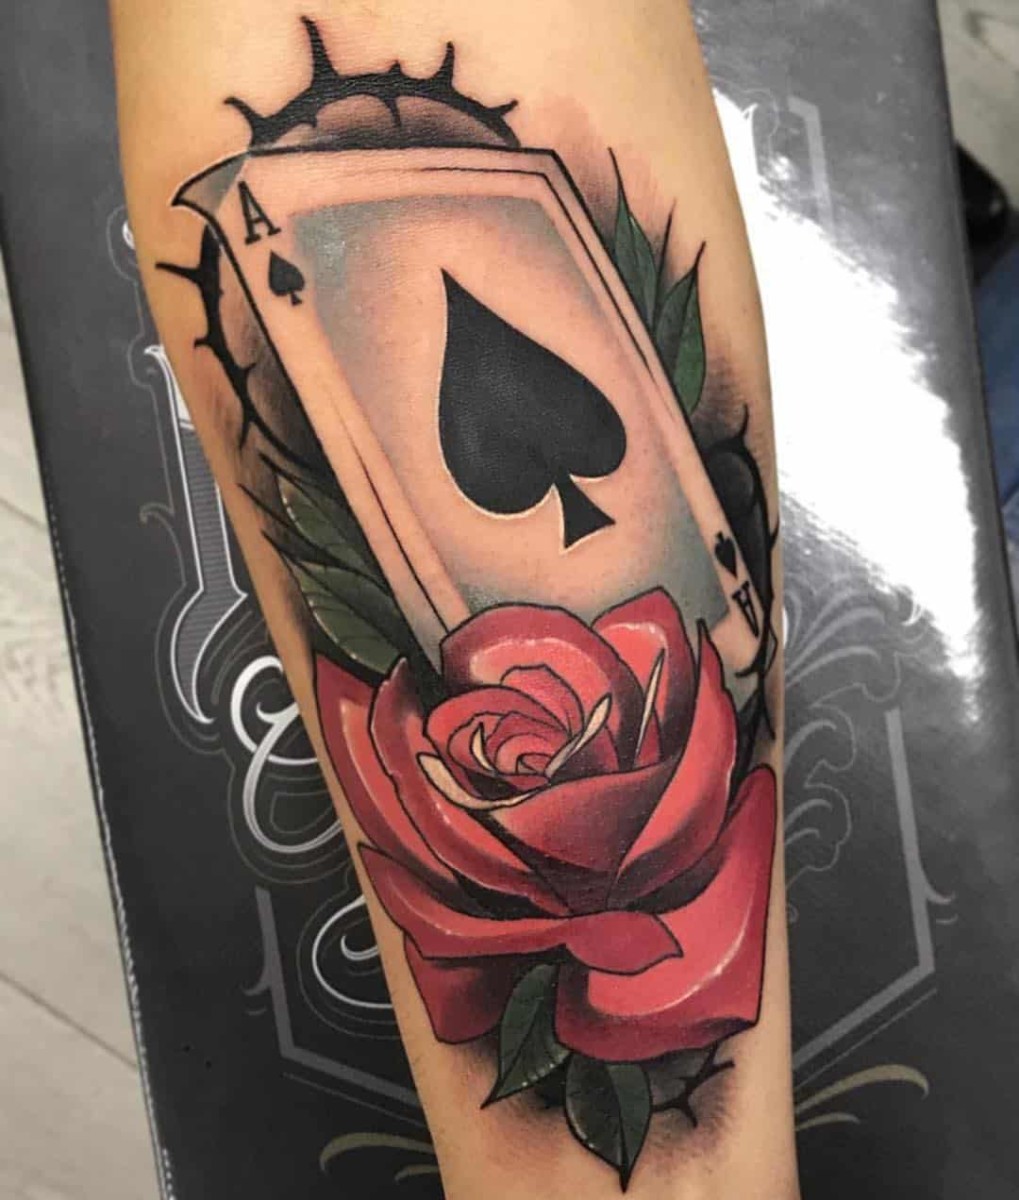 ace-of-spades-tattoo-rose-by-@estepa_tattoo